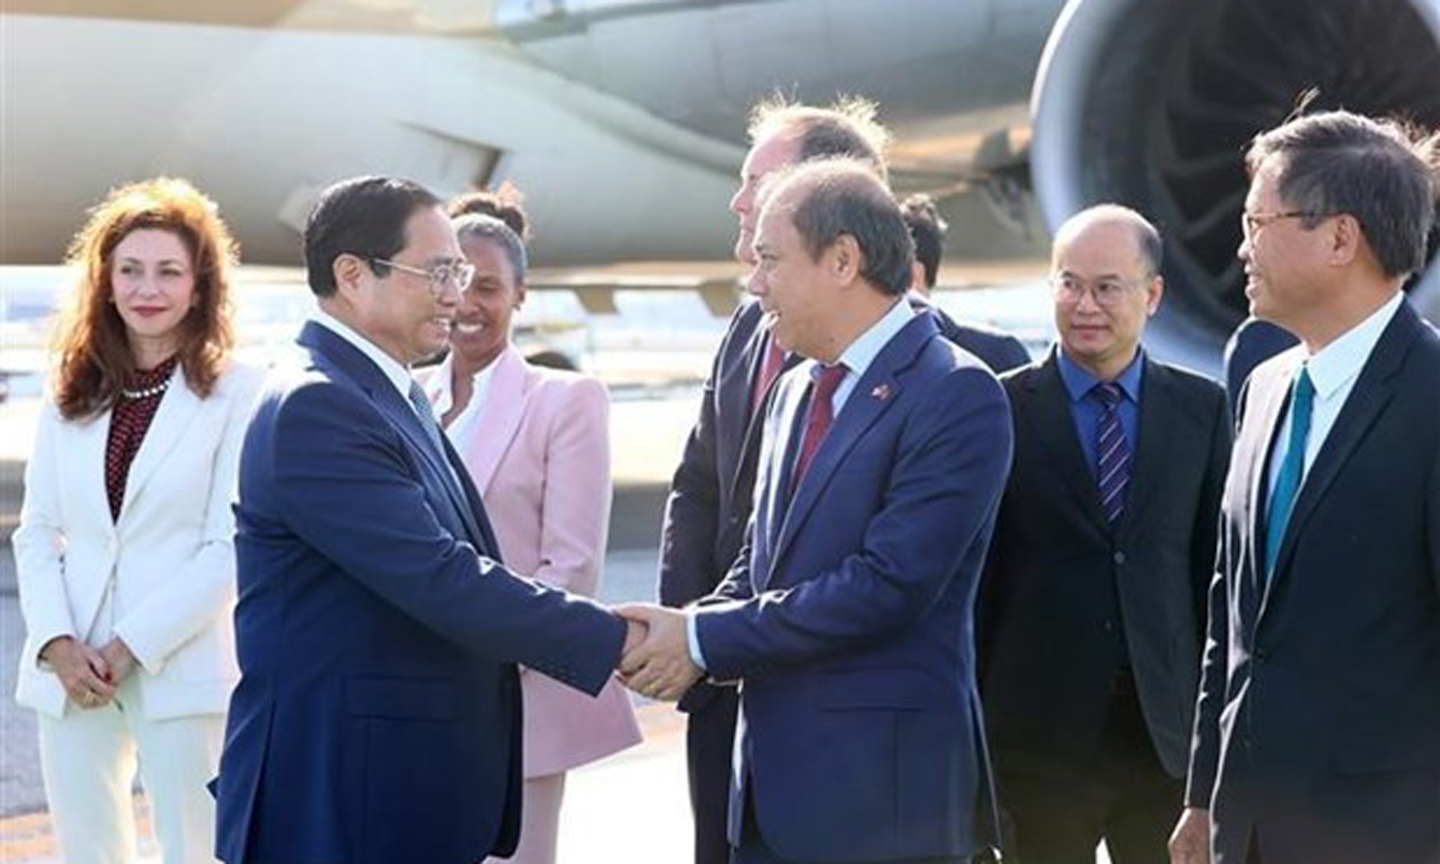 Prime Minister Pham Minh Chinh arrives in US